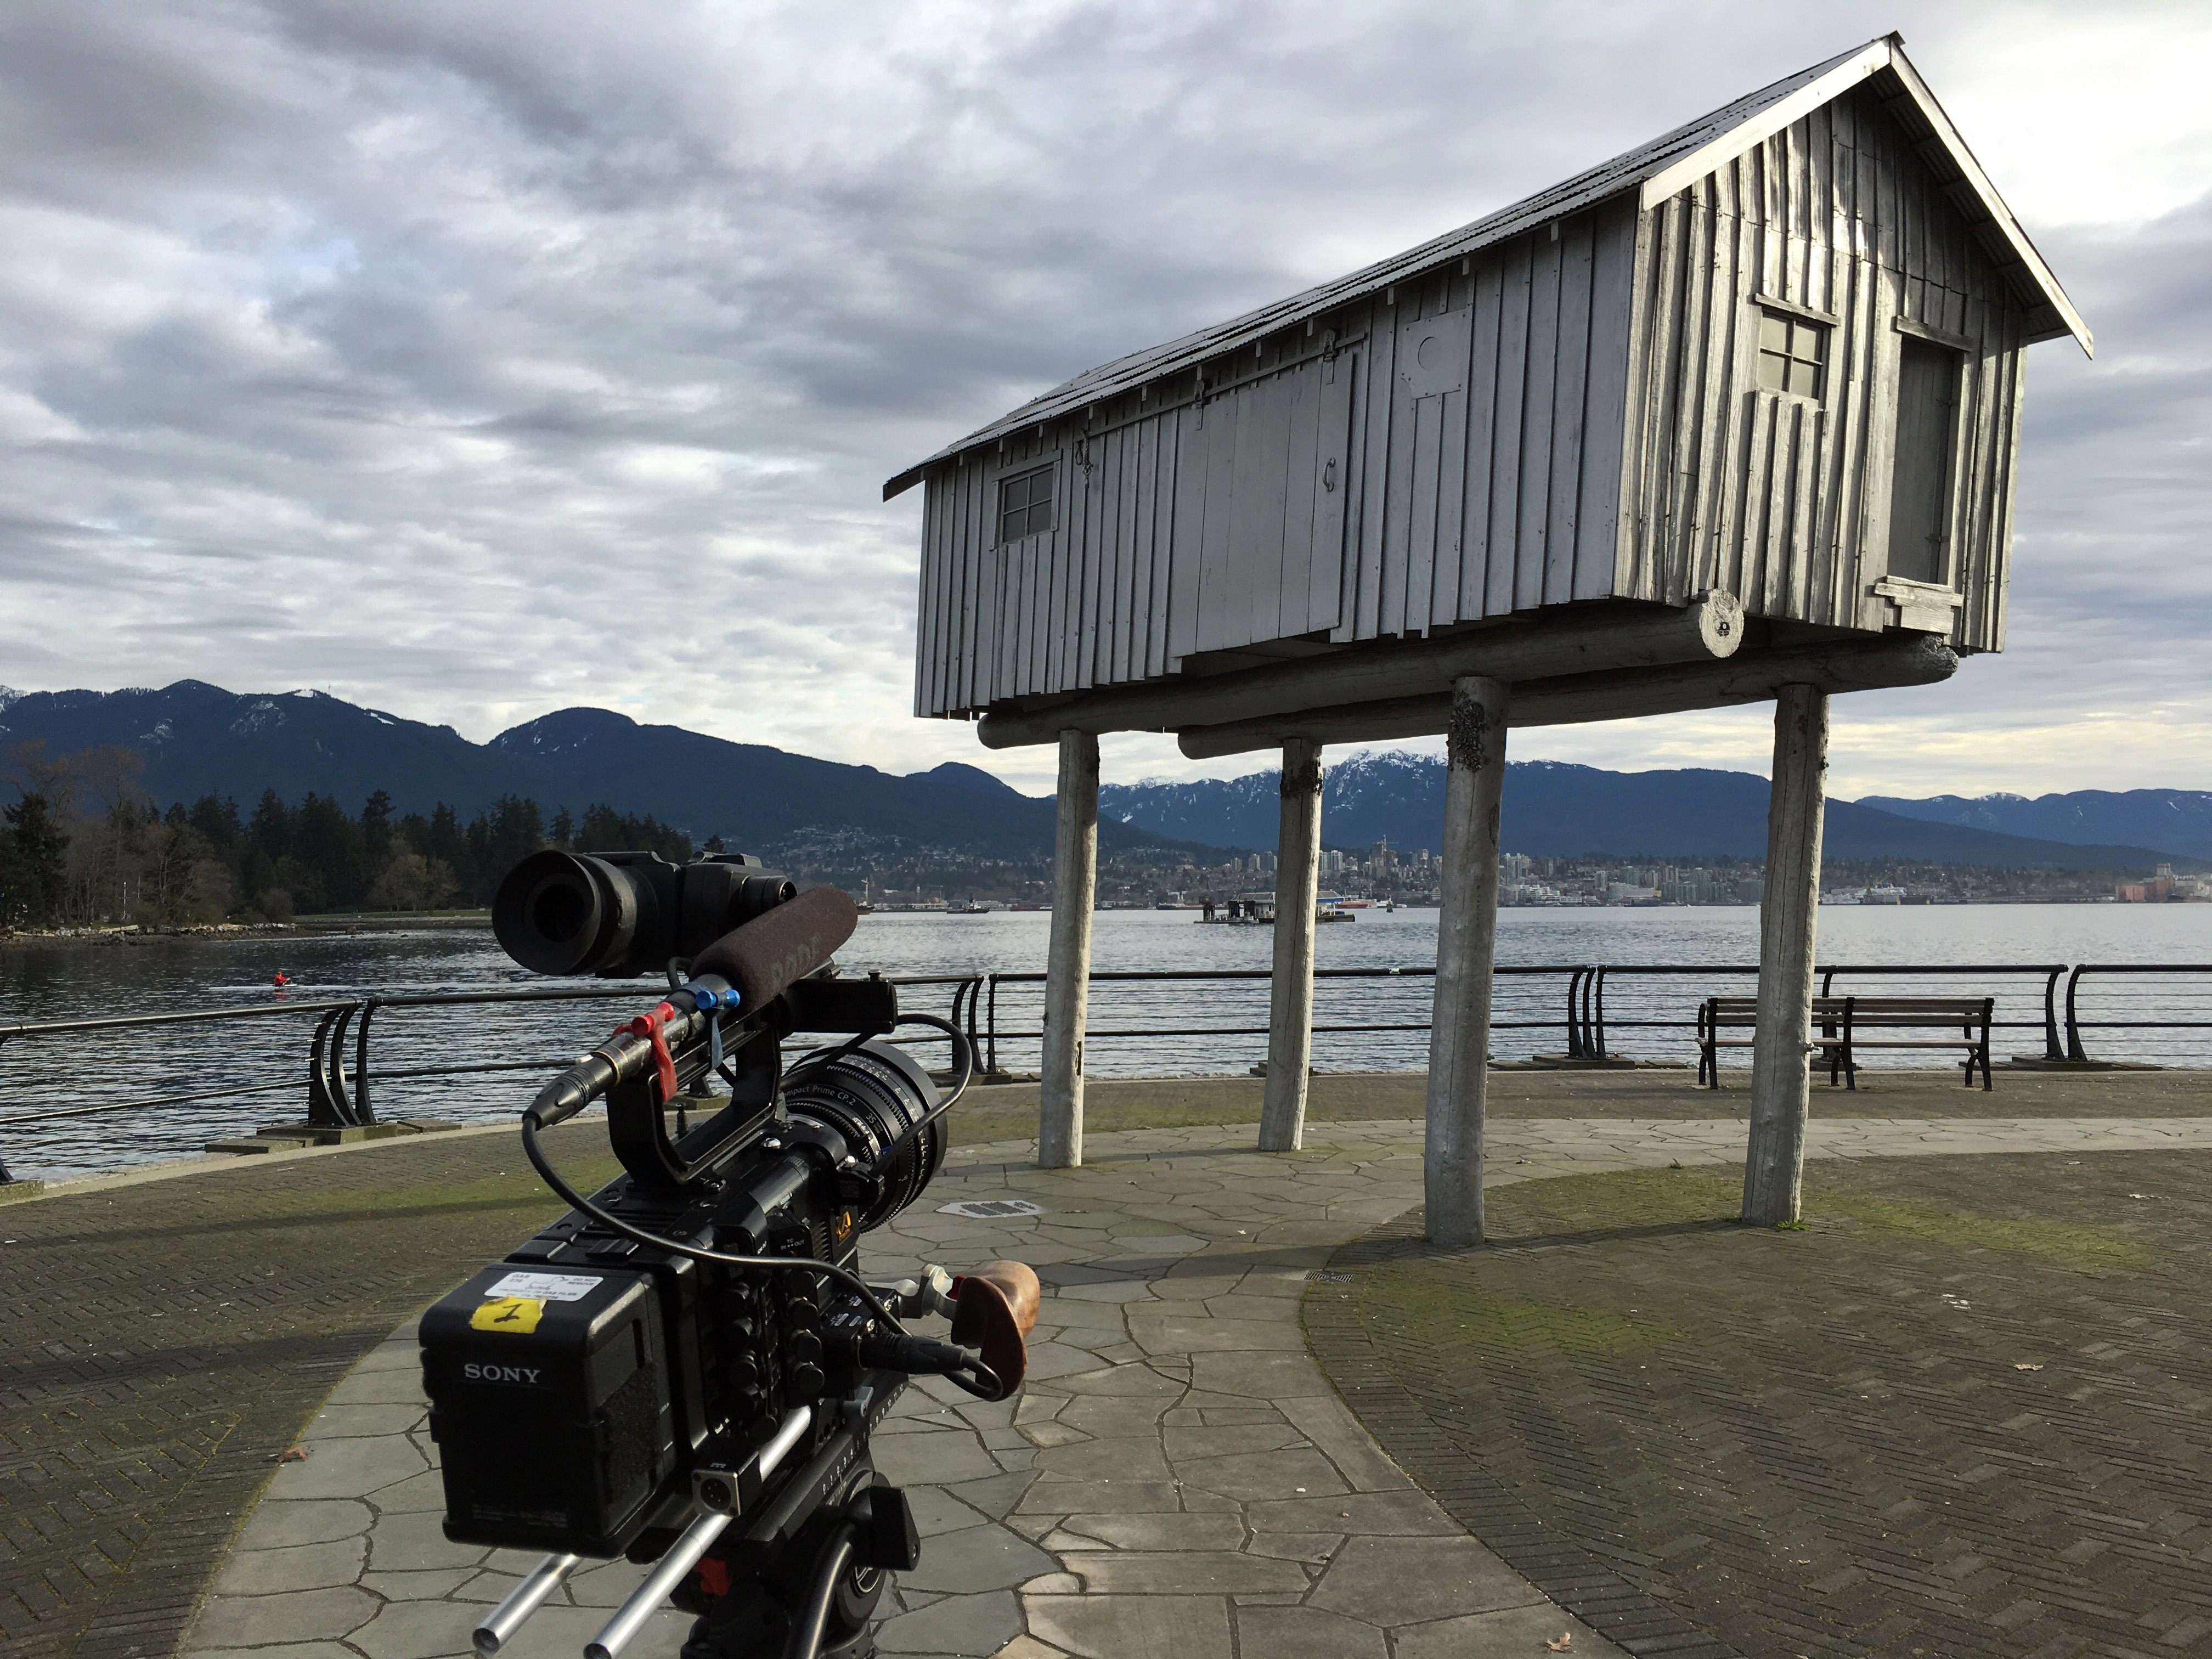 ART21 filming Liz Magor’s LightShed at Coal Harbour in Vancouver, Canada, 2016. Behind the scenes of ART21’s series Art in the Twenty-First Century, Season 8, 2016. Photo: Wesley Miller. © ART21, Inc. 2016.